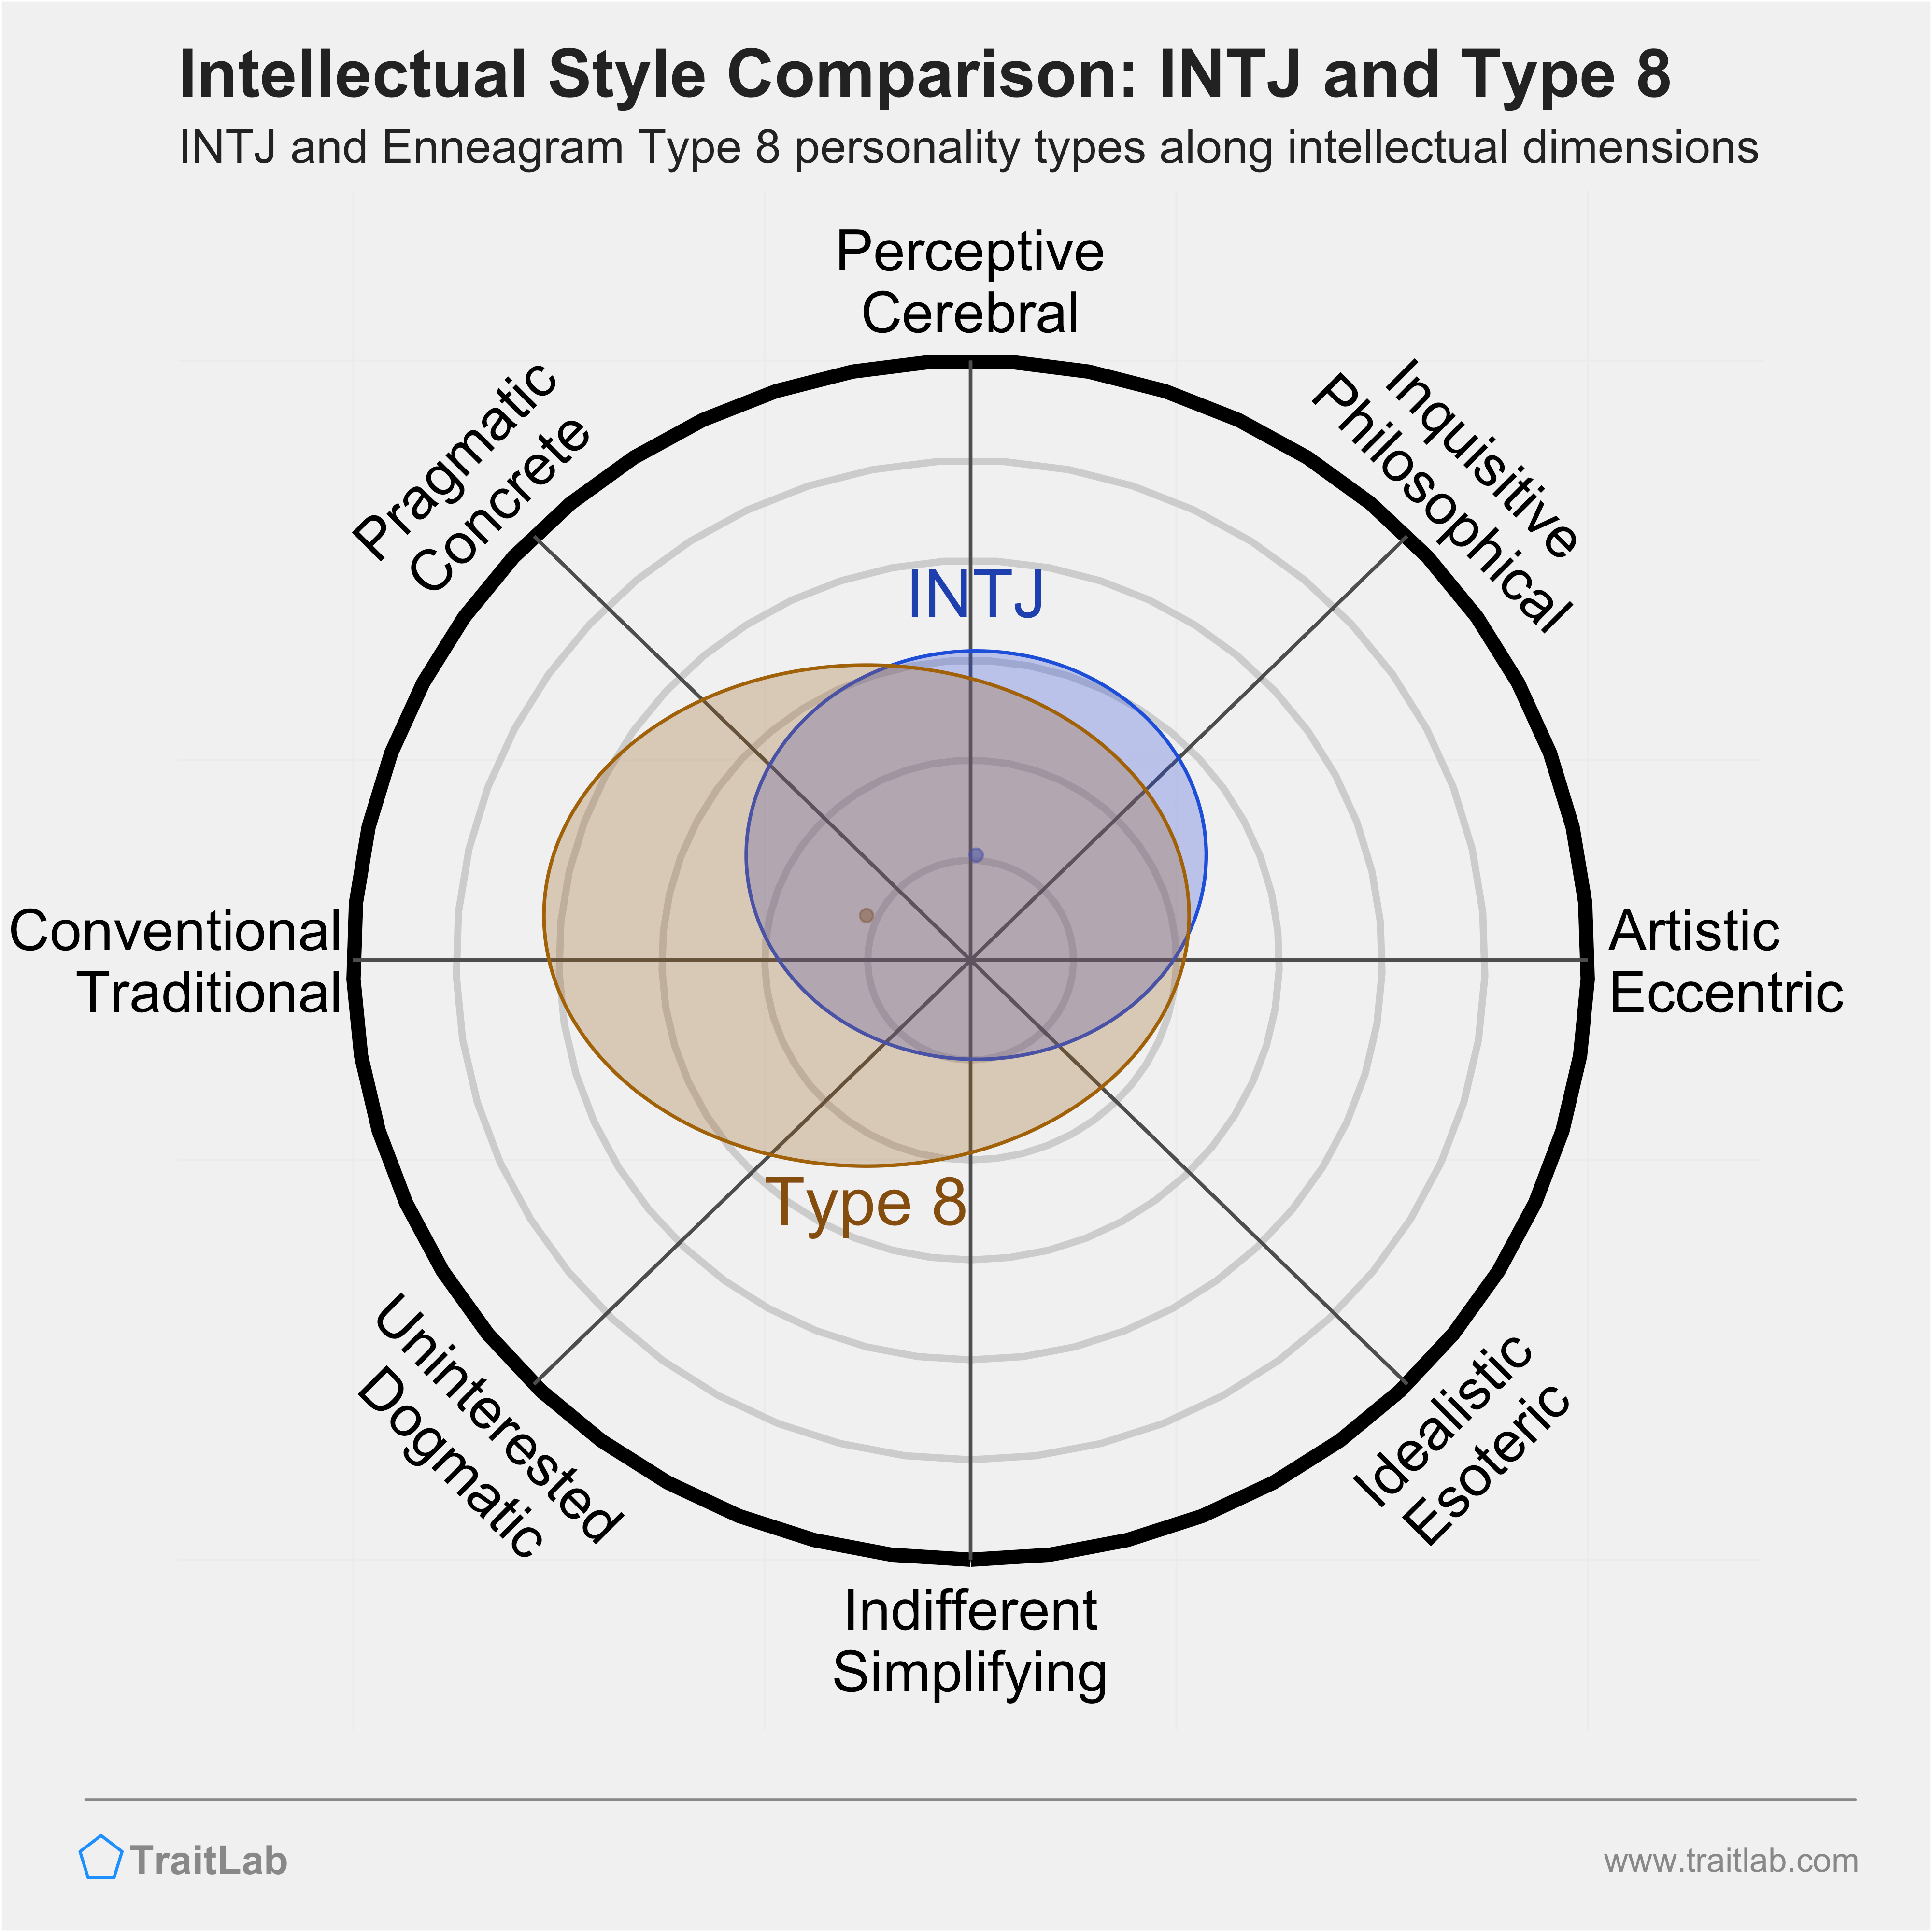 INTJ and Type 8 comparison across intellectual dimensions